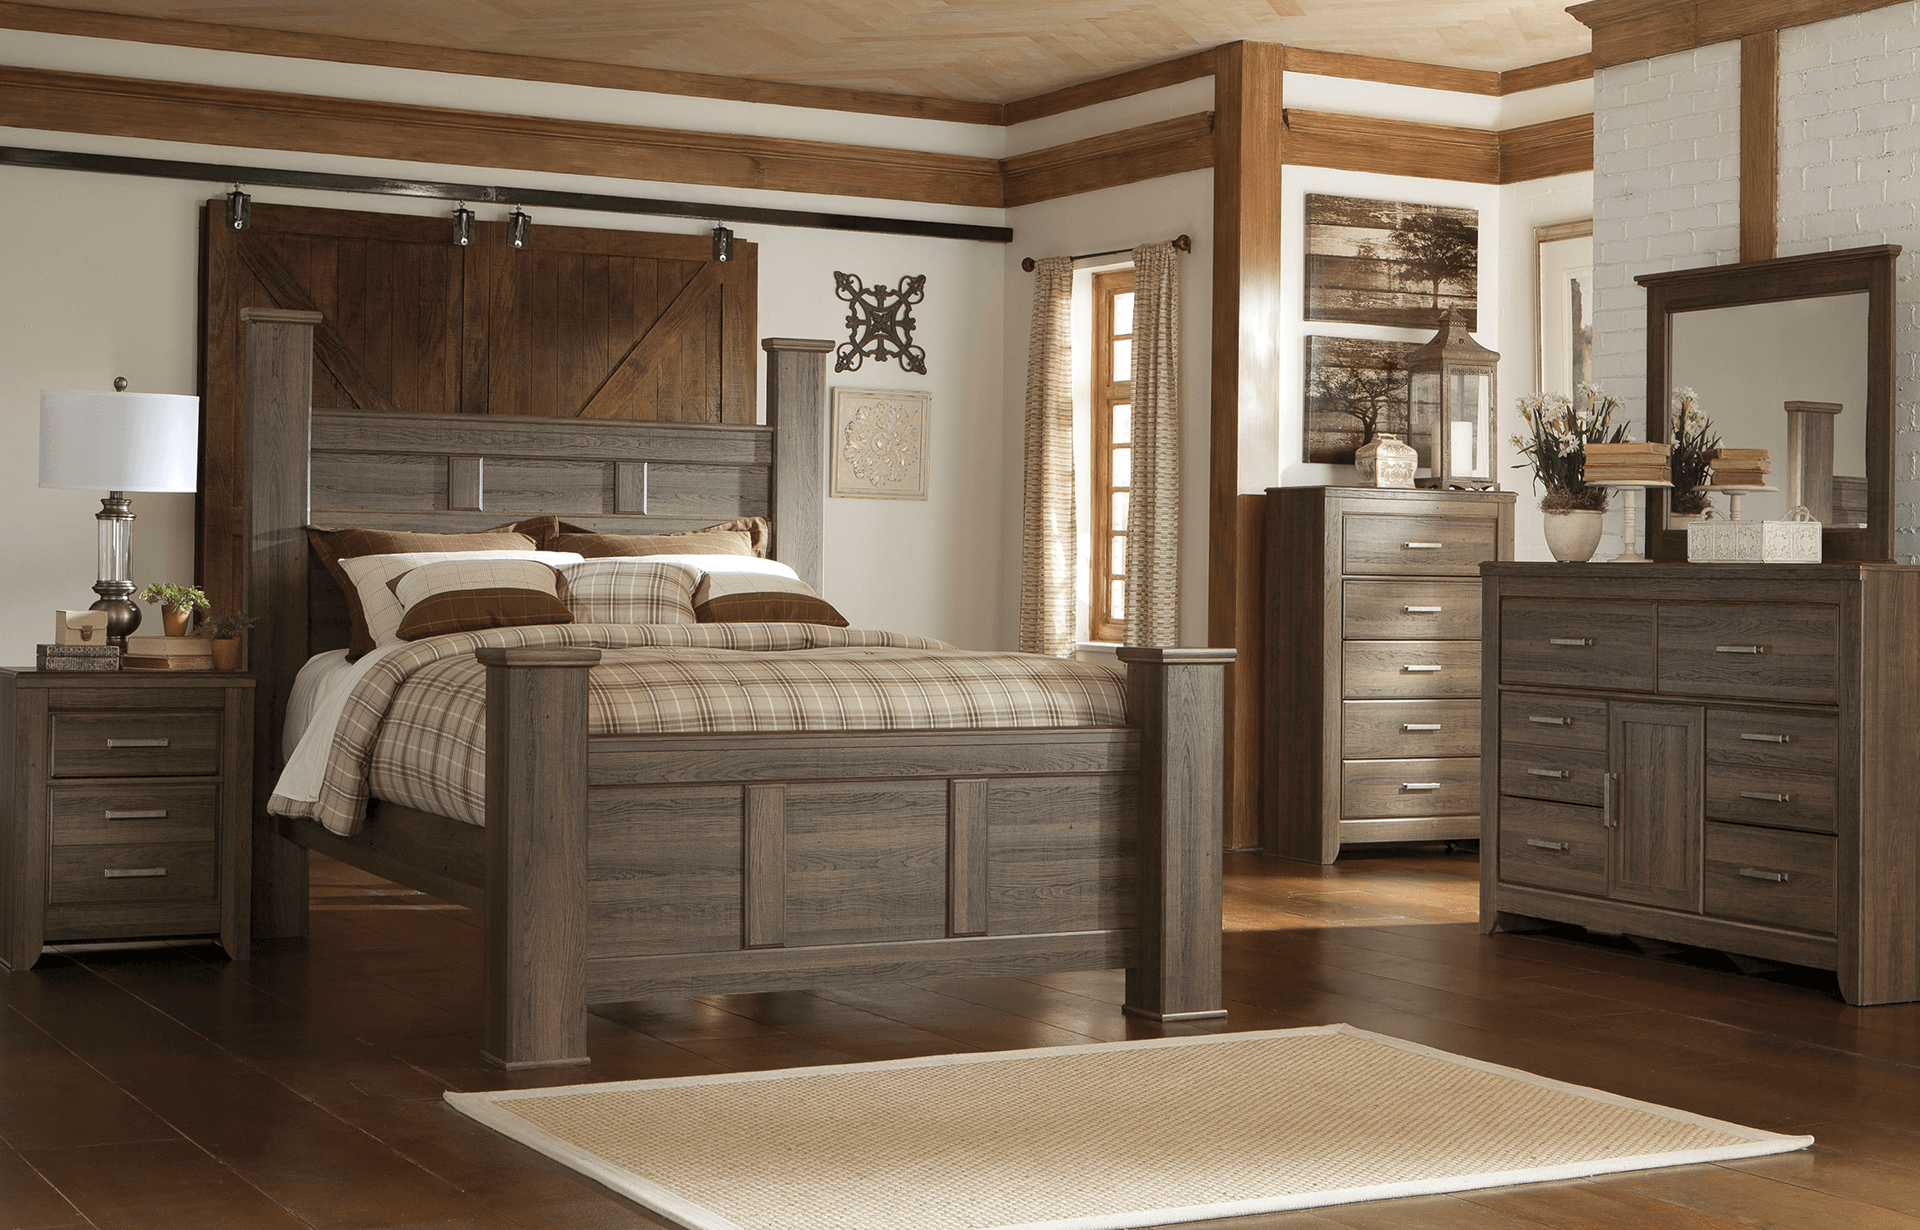 Atlantic_Furniture-Bedrooms-B251-hi-res